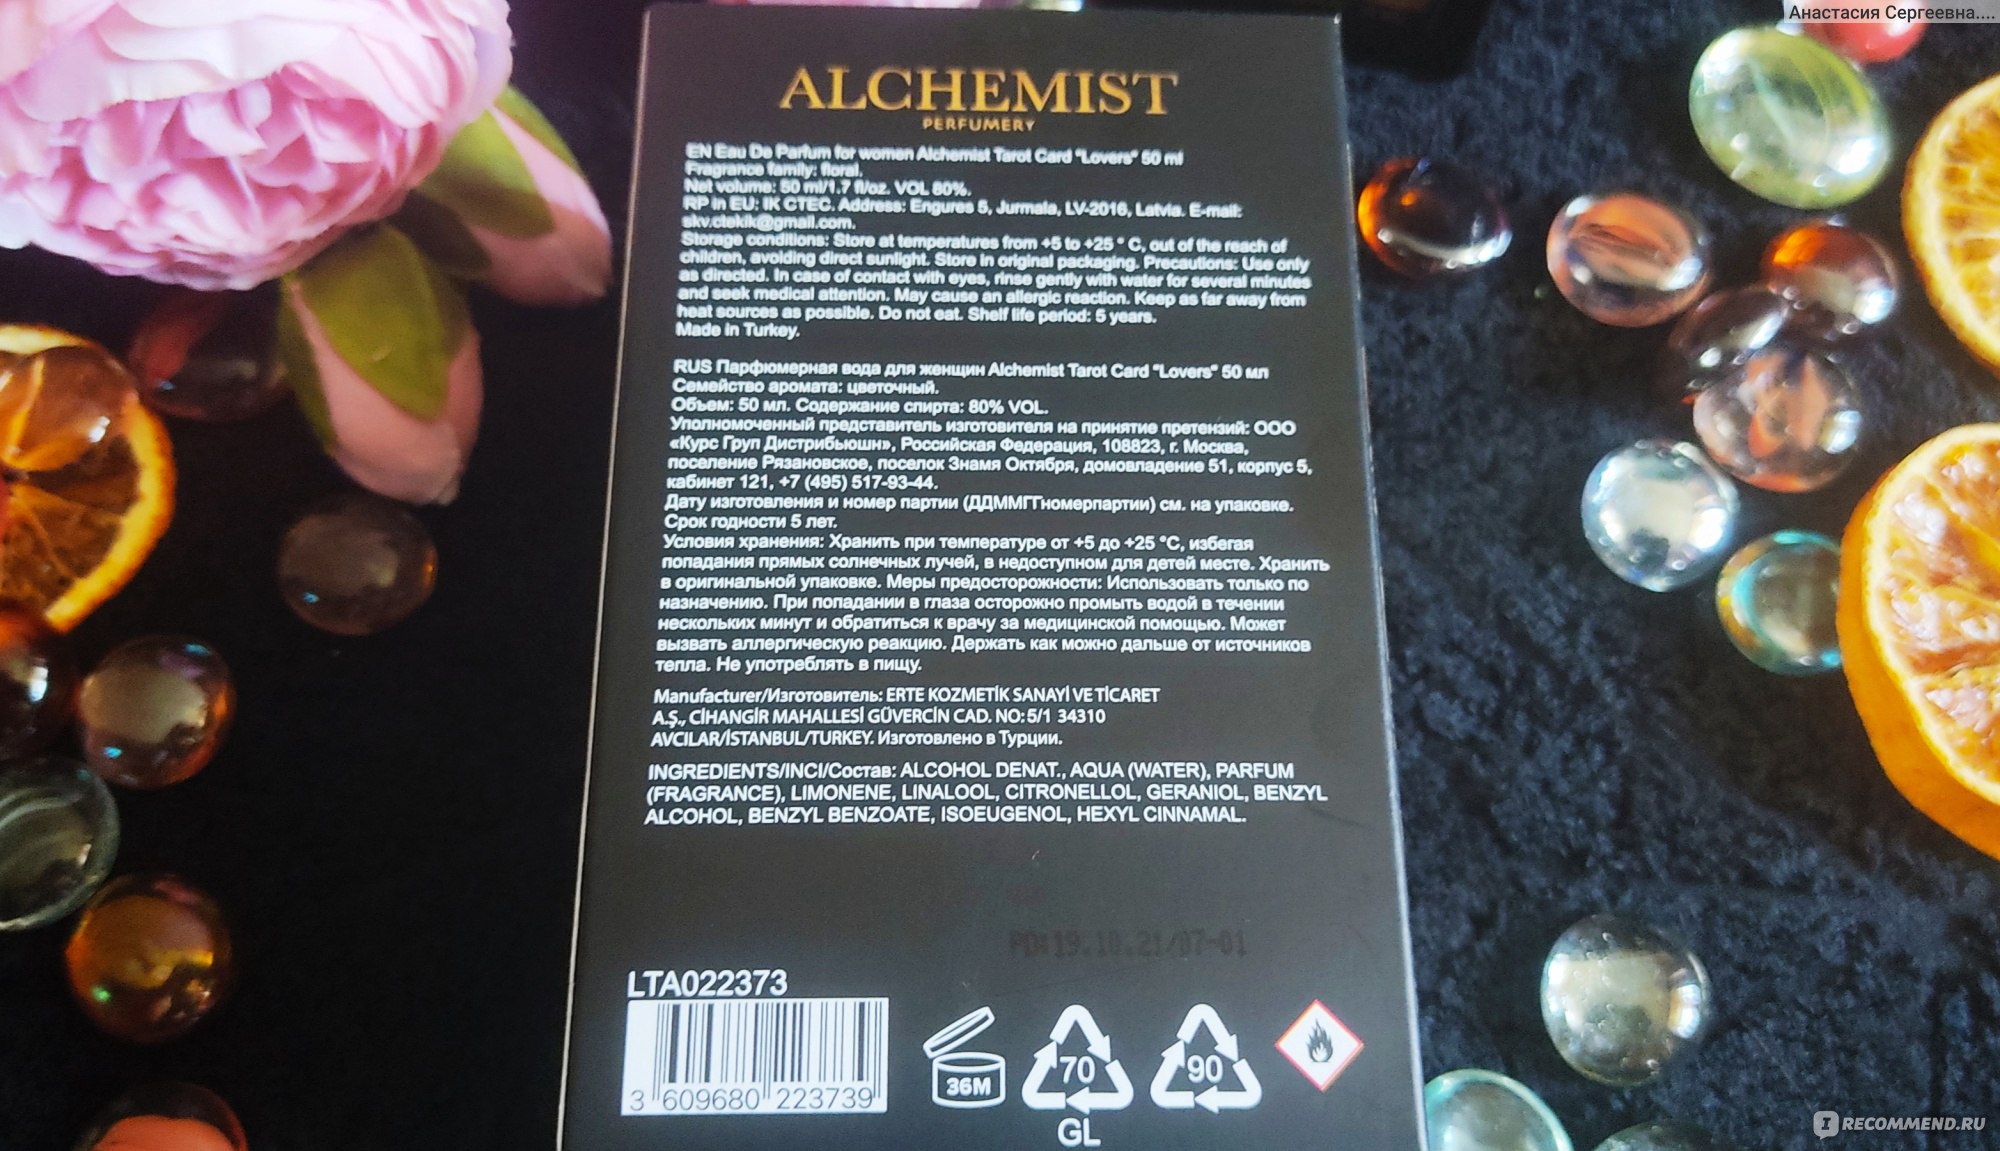 ALCHEMIST Tarot Card "The Lovers" фото